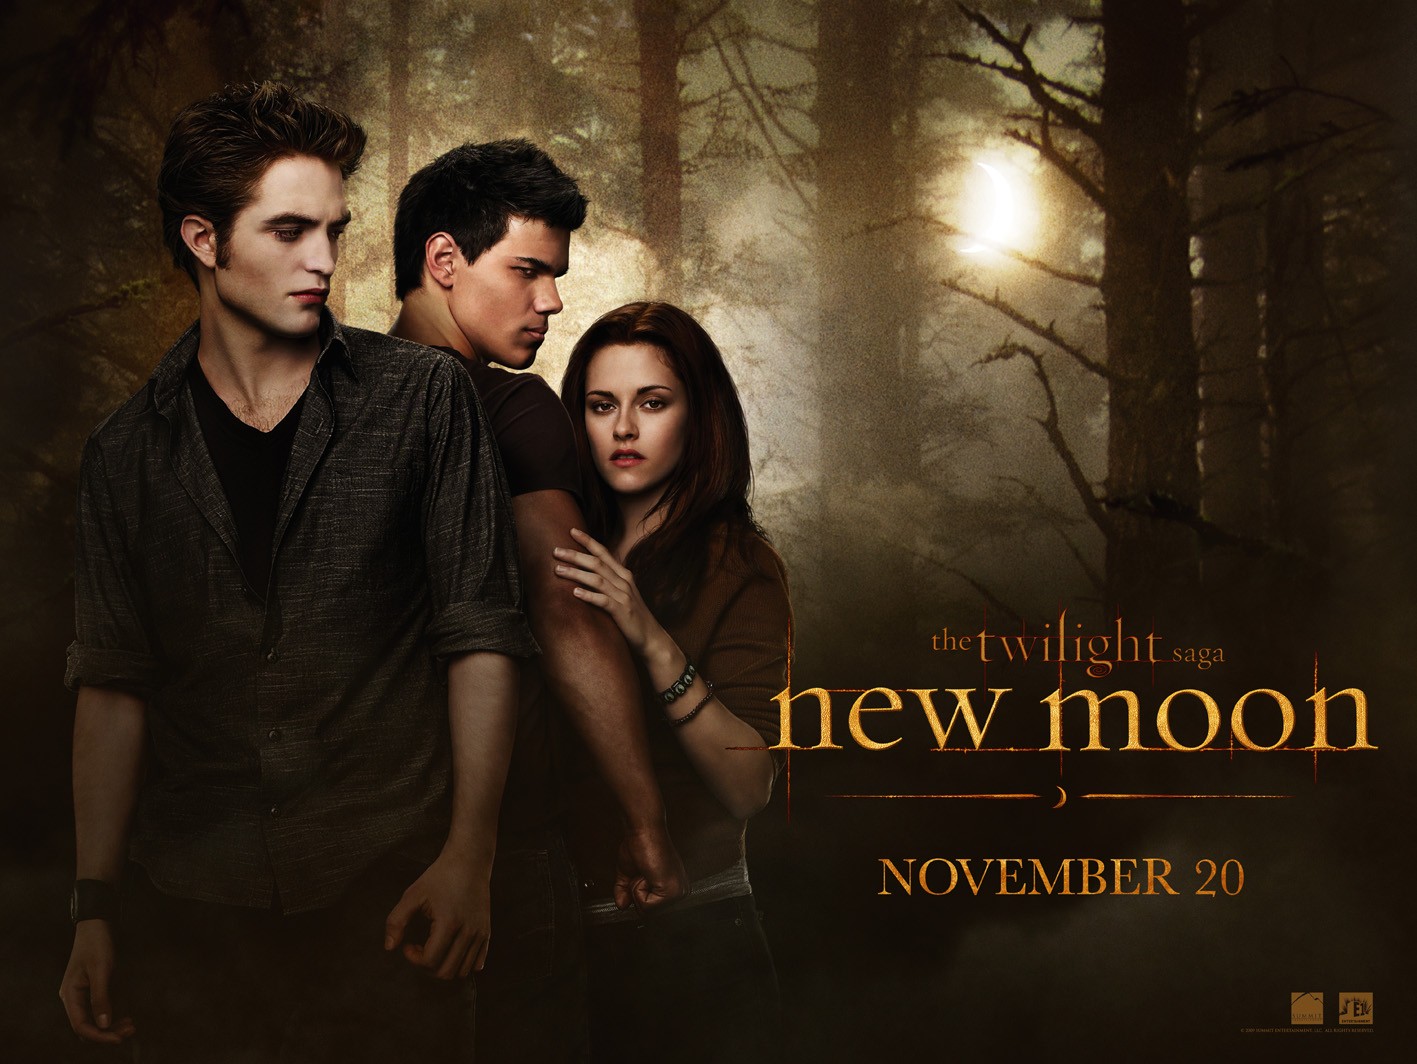 twilight saga new moon full movie download in hindi hd 720p 500mb